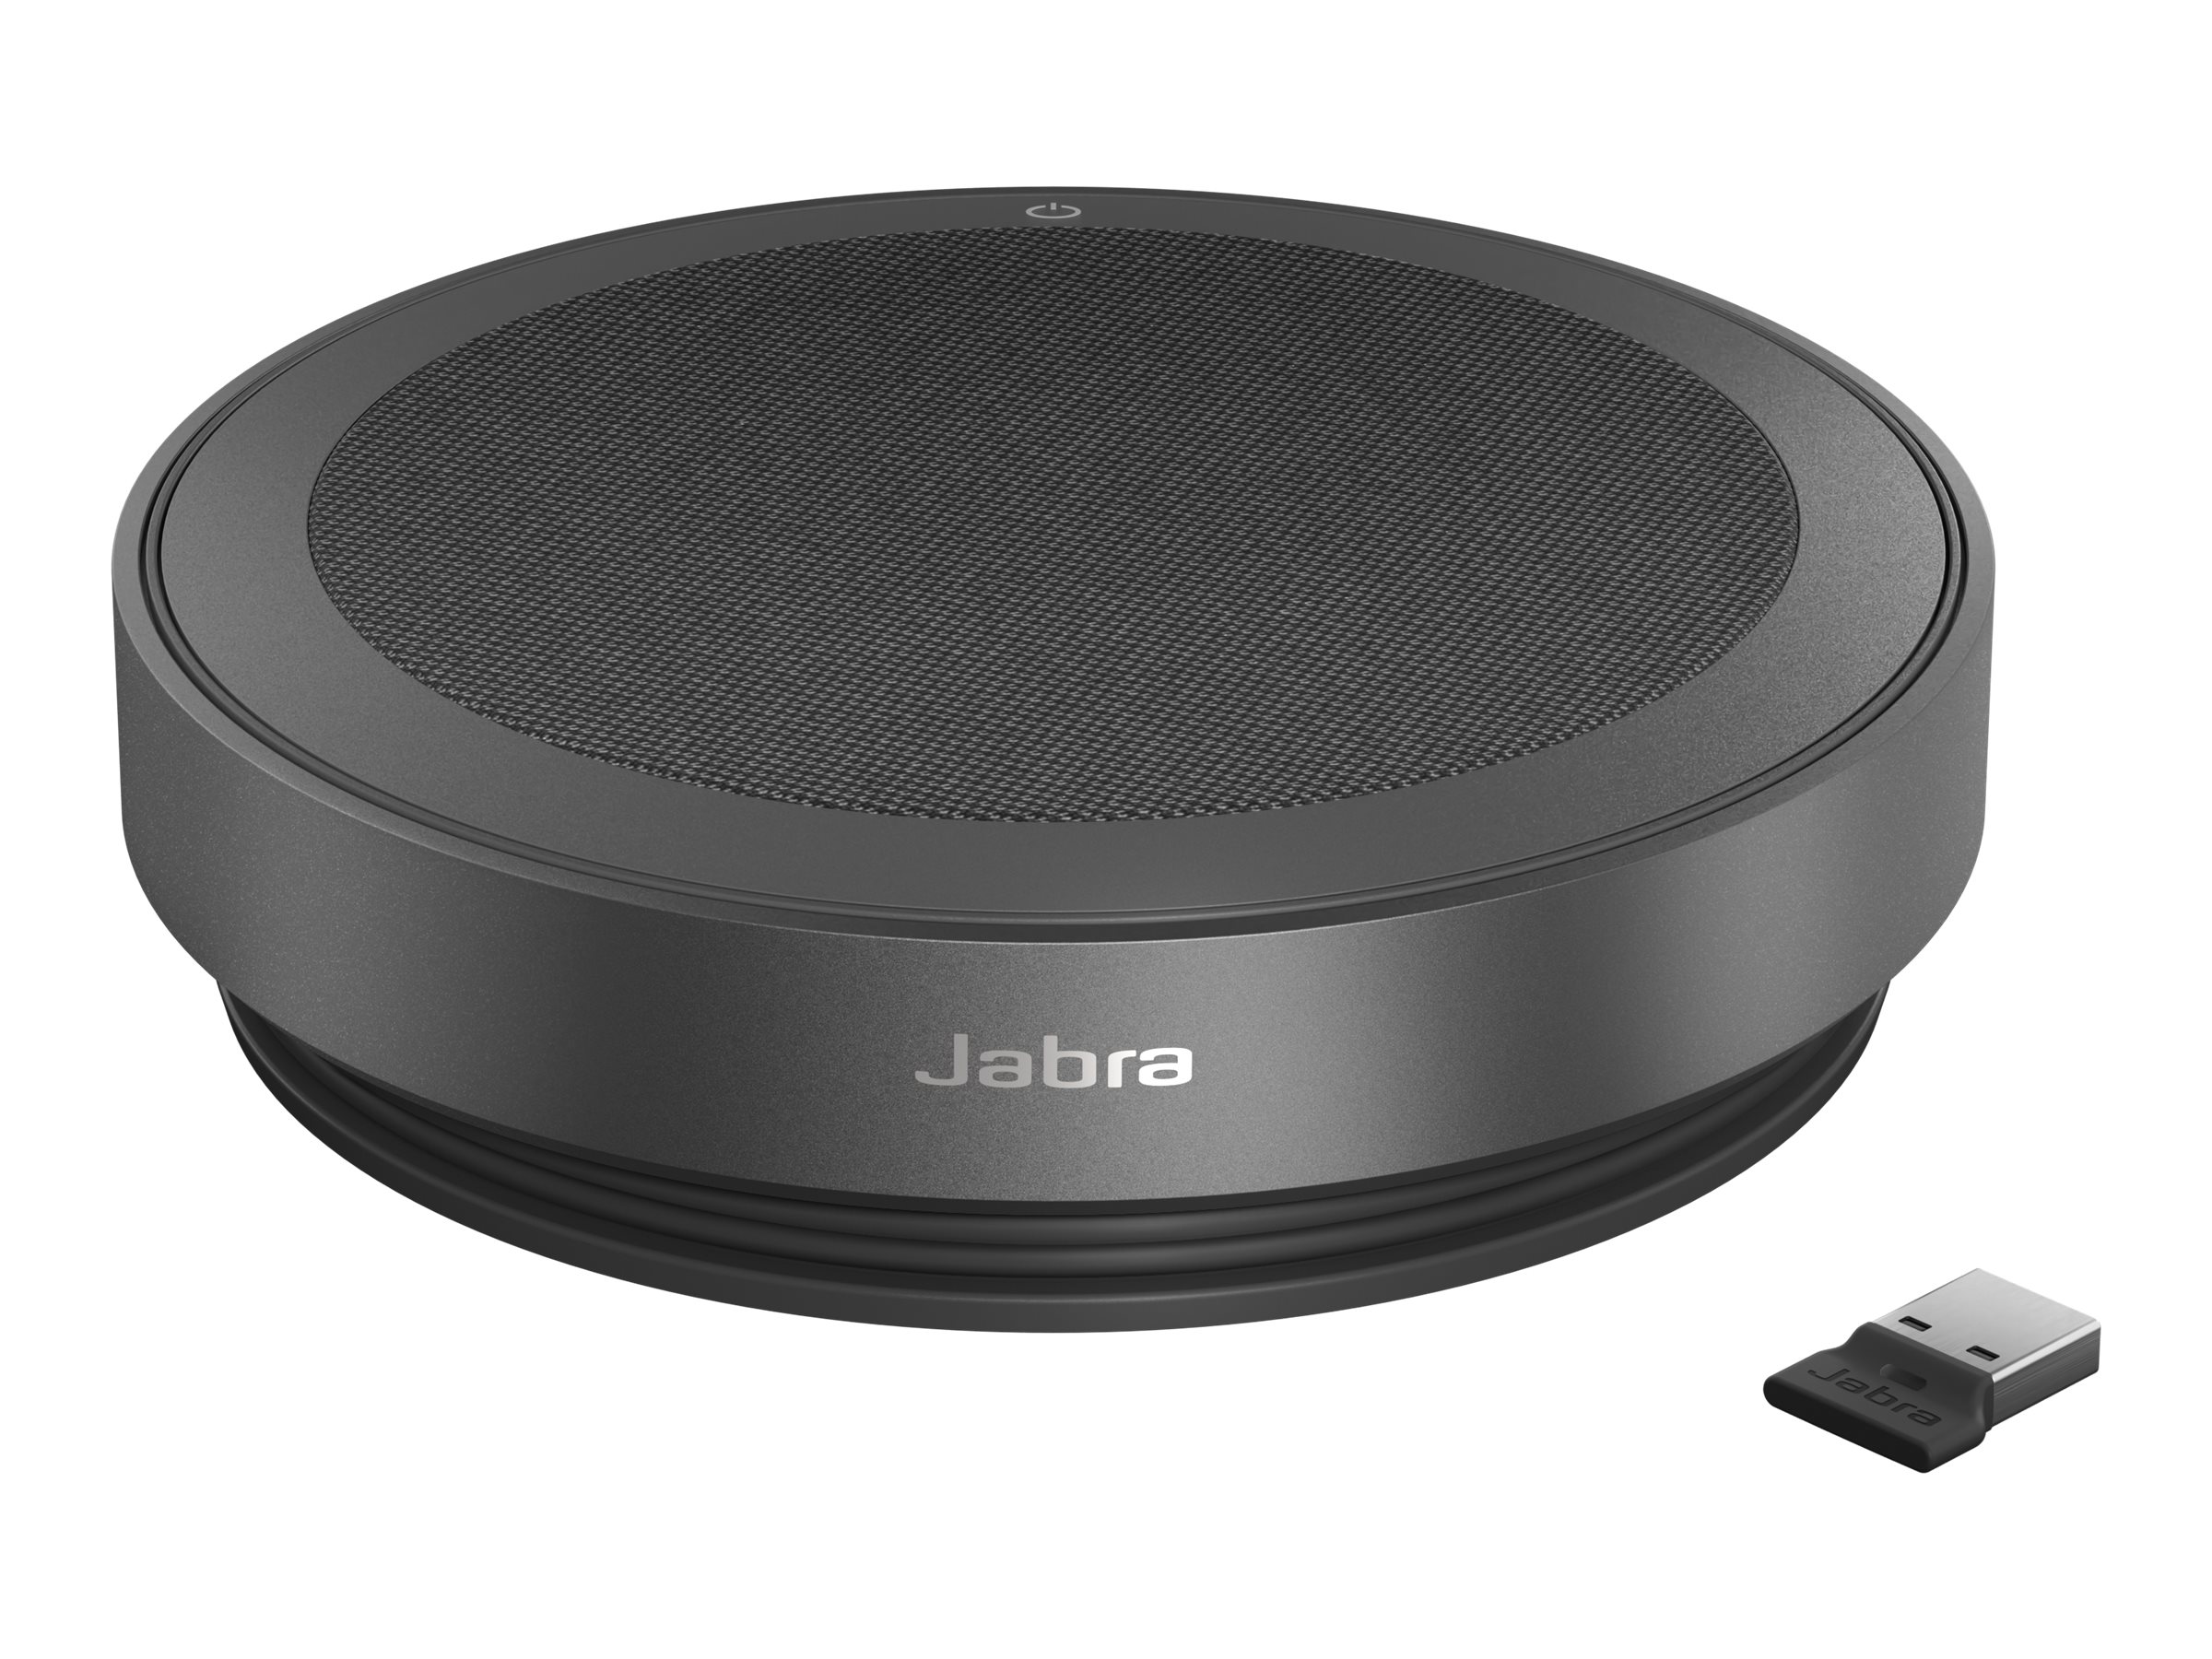 Jabra Speak2 hands-free Speakerphone - UC 75